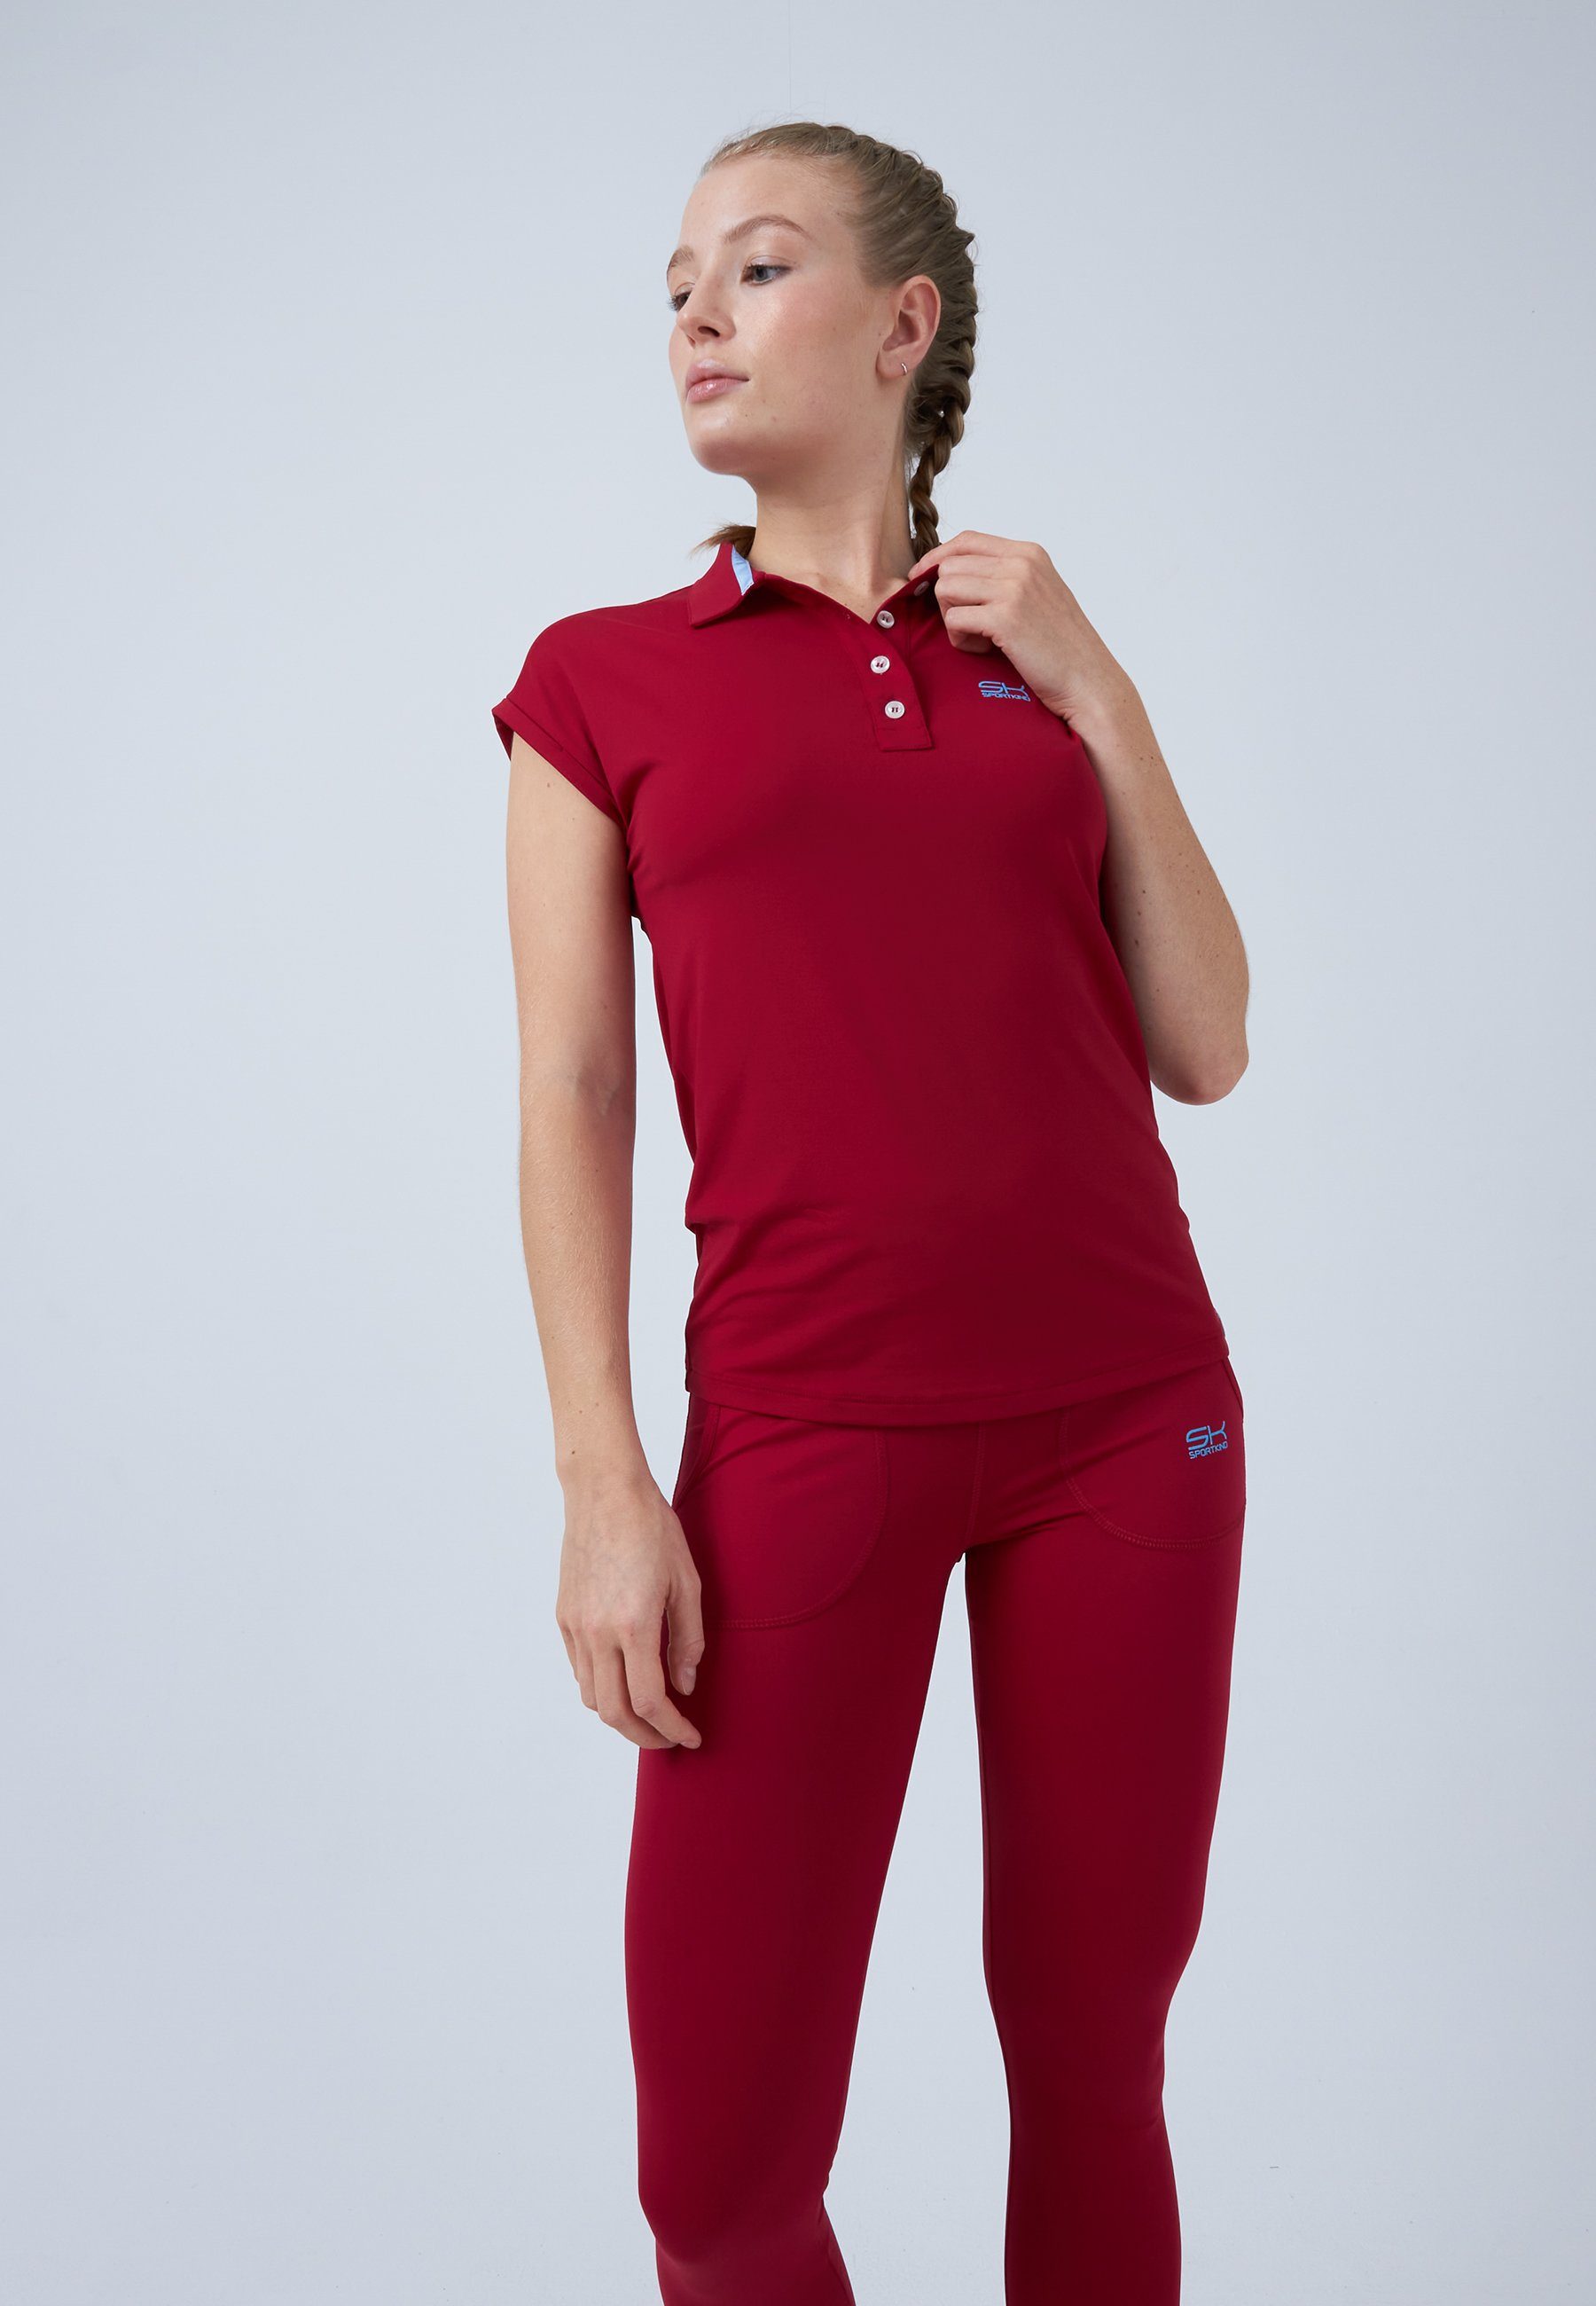 Polo Loose-Fit rot SPORTKIND Mädchen & Funktionsshirt Damen Shirt Golf bordeaux